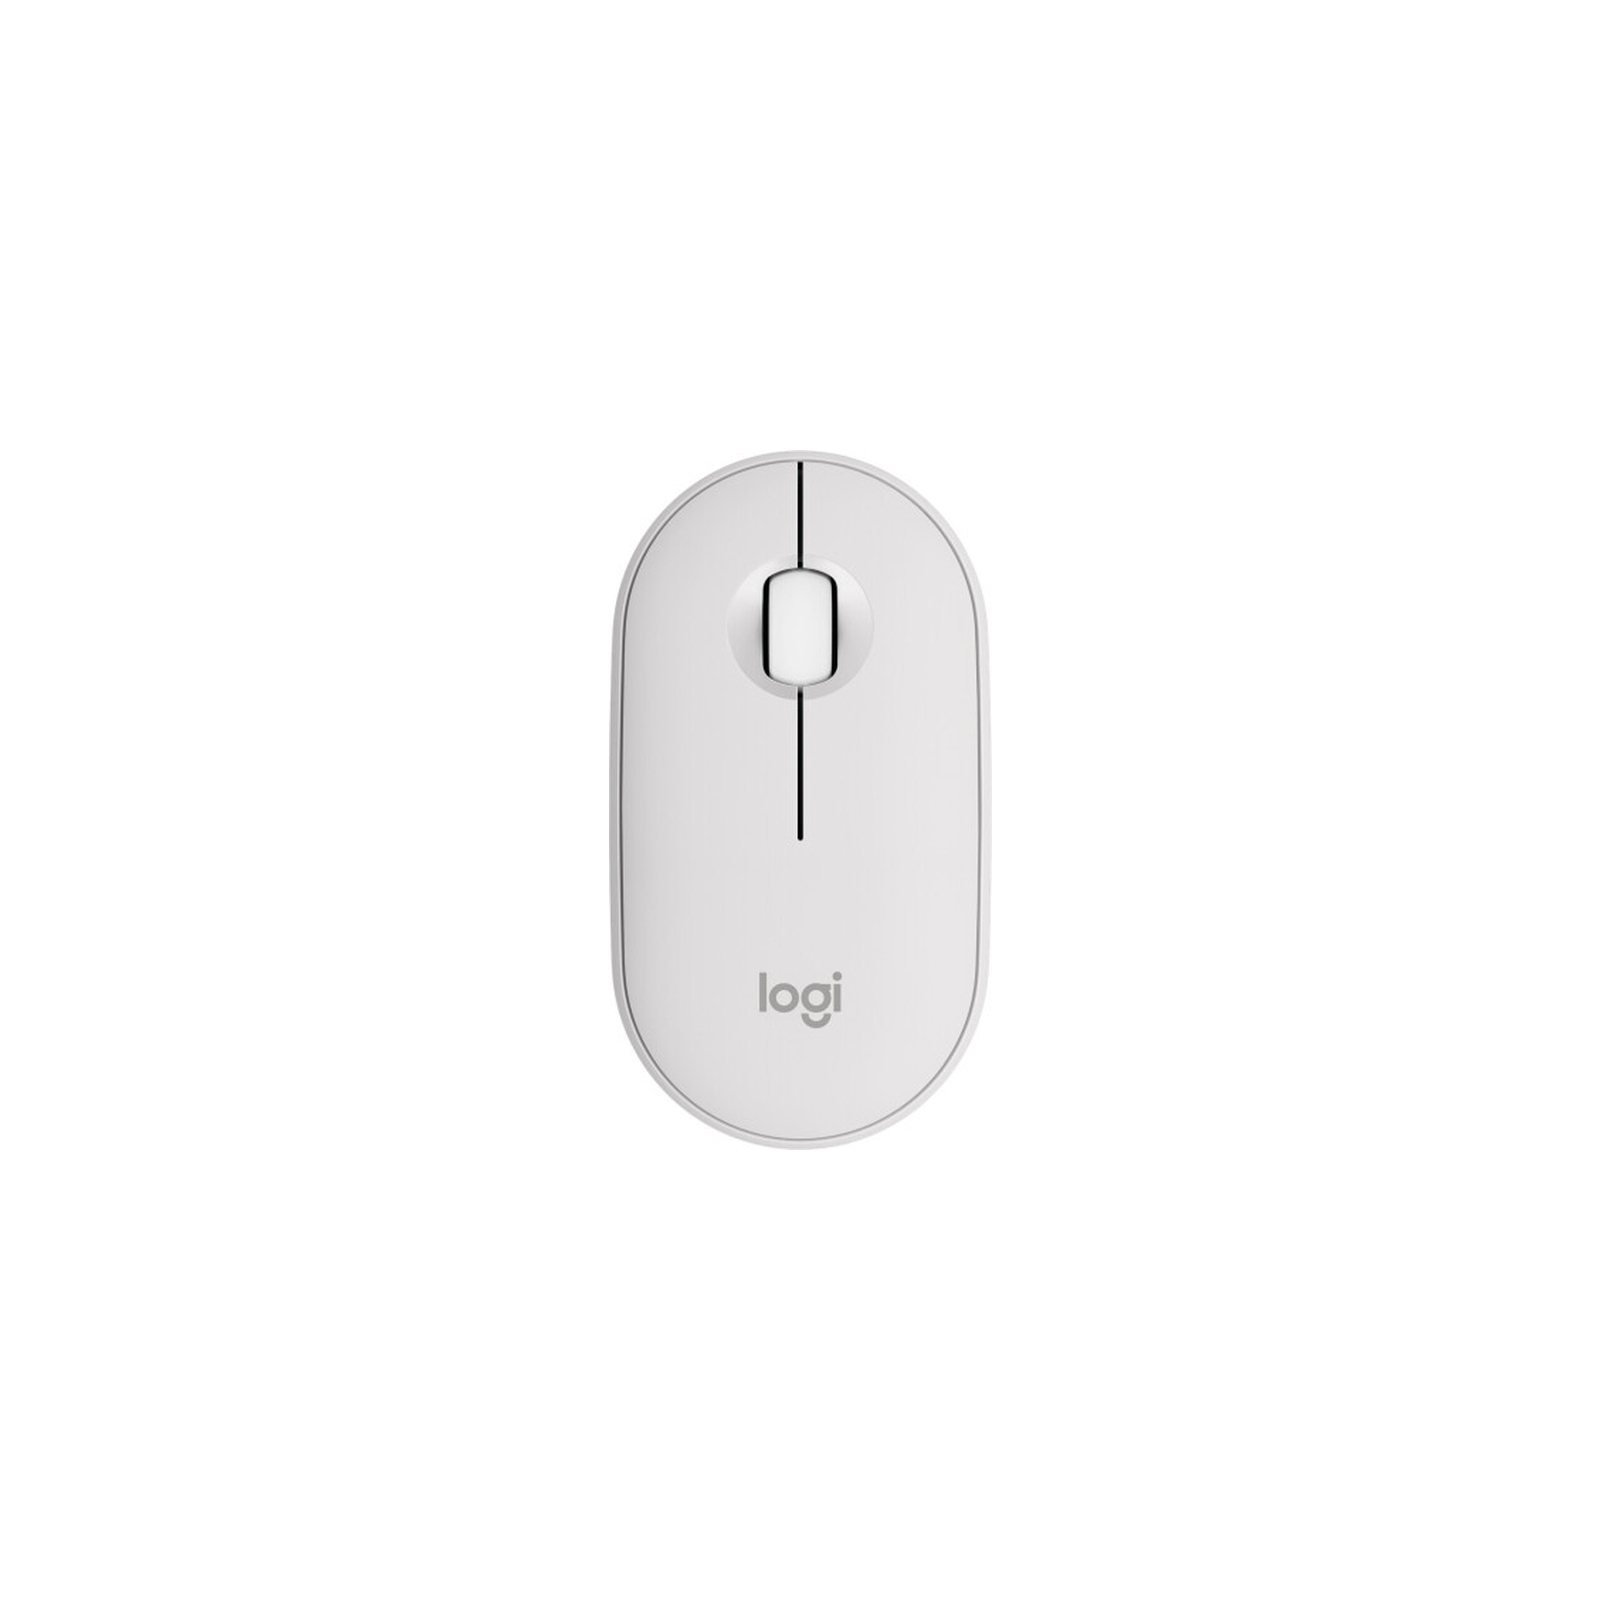 Мышка Logitech M350s Wireless White (910-007013)